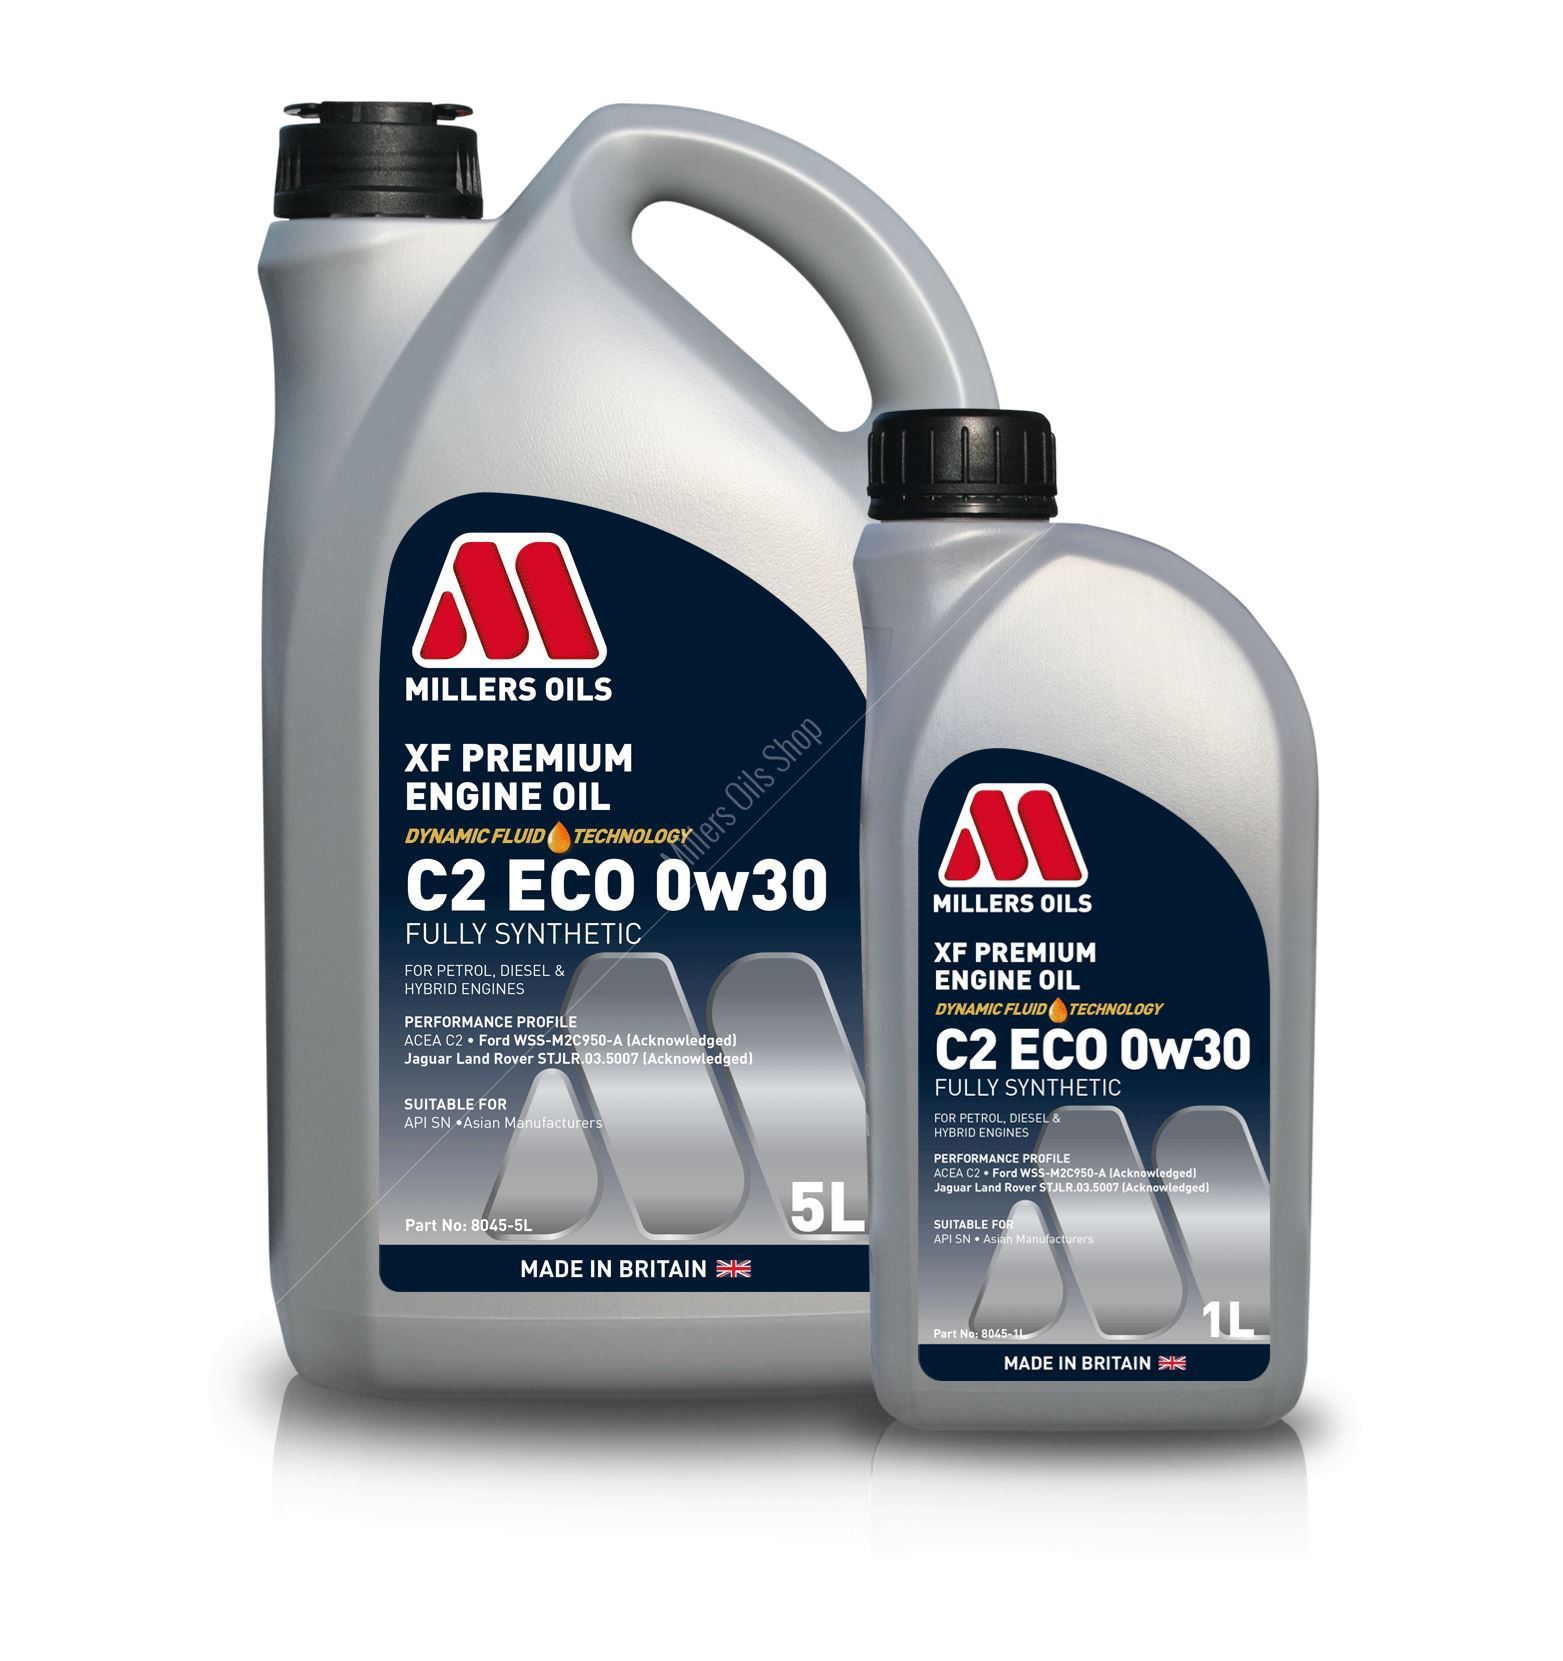 Millers Oils XF Premium C2 ECO 0w30 Engine Oil - Buy Online - Millers Oils  Shop